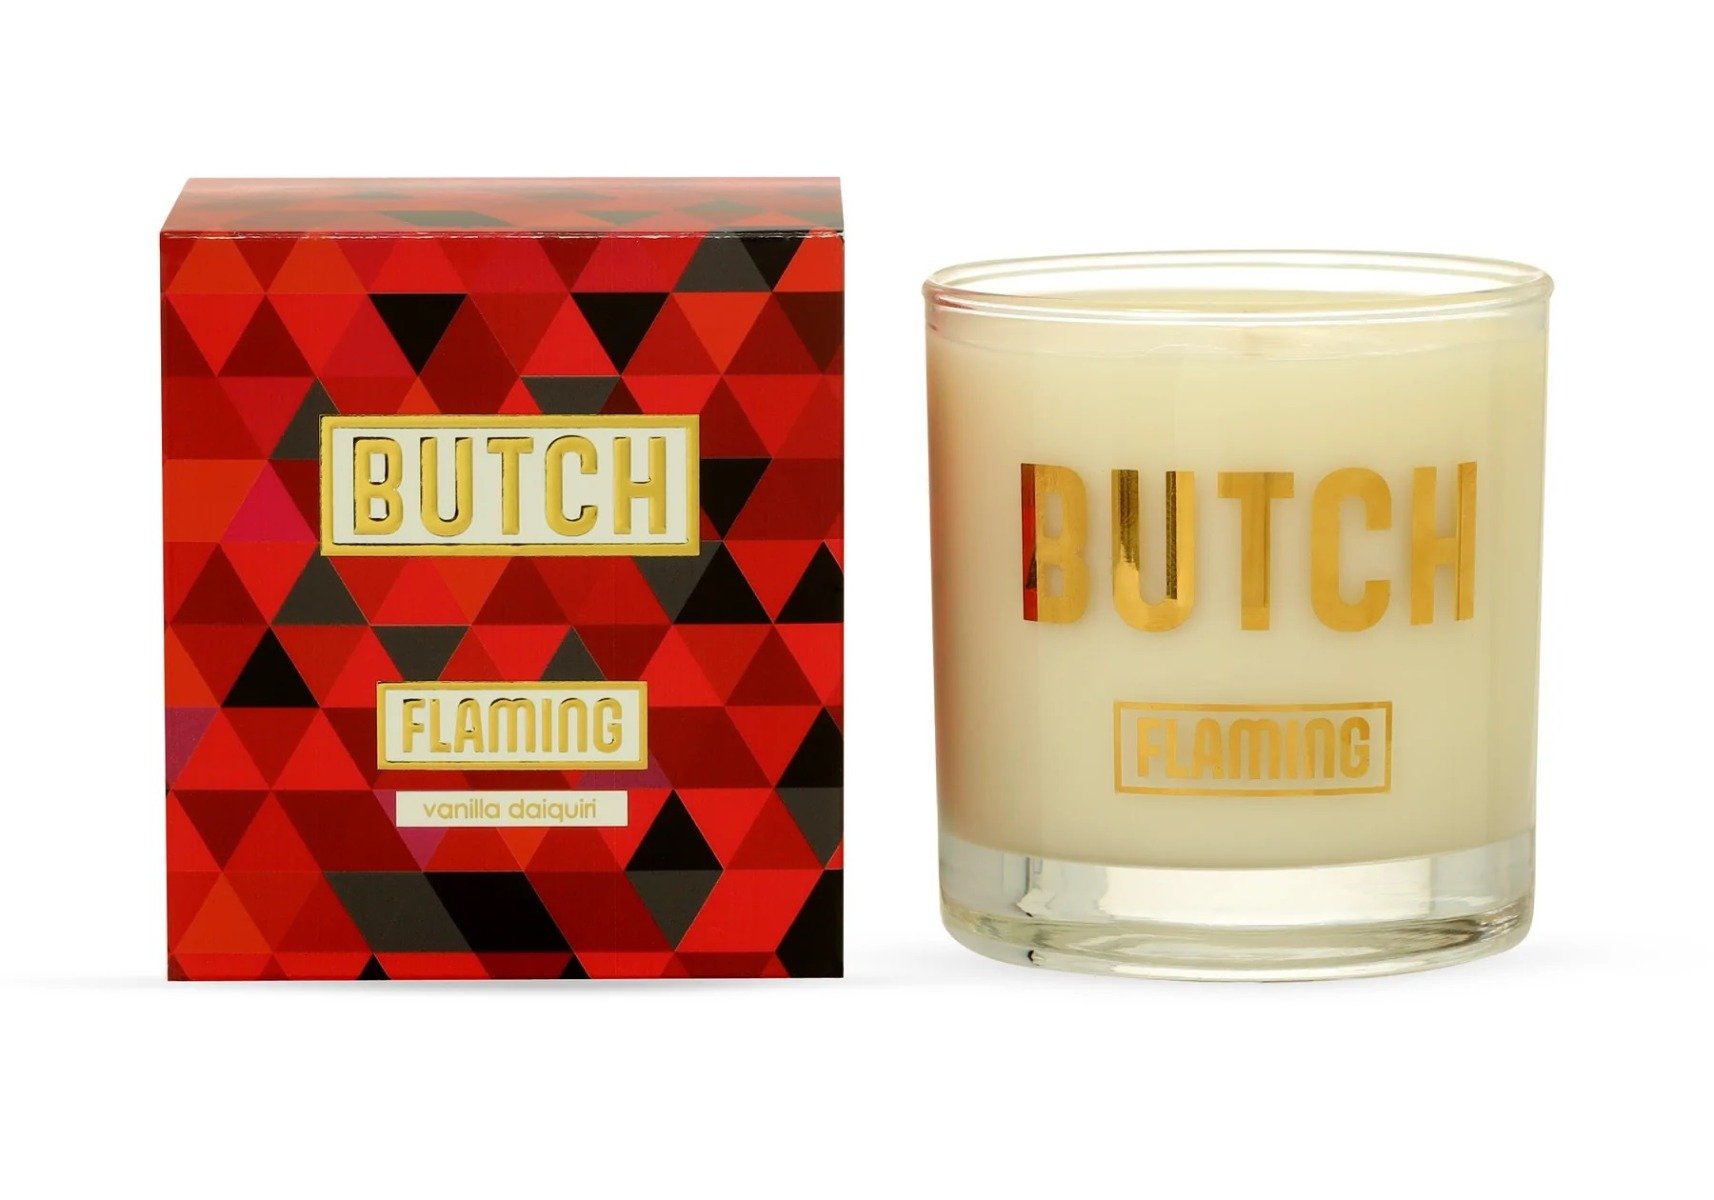 Butch (Vanilla Daiquiri) Candle